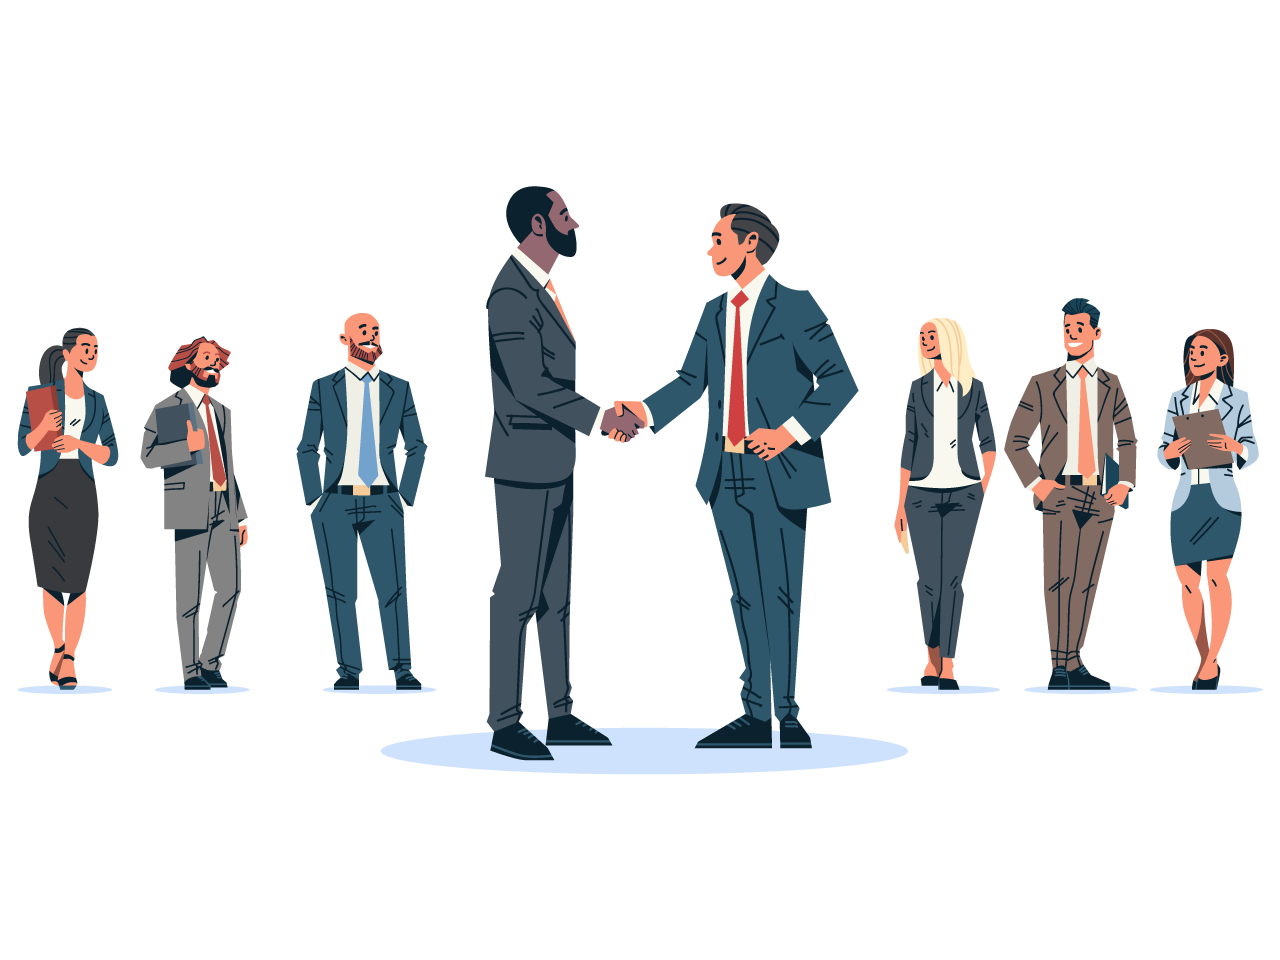 Businessmen handshake agreement concept mix race business men team leader hand shake international partnership communication